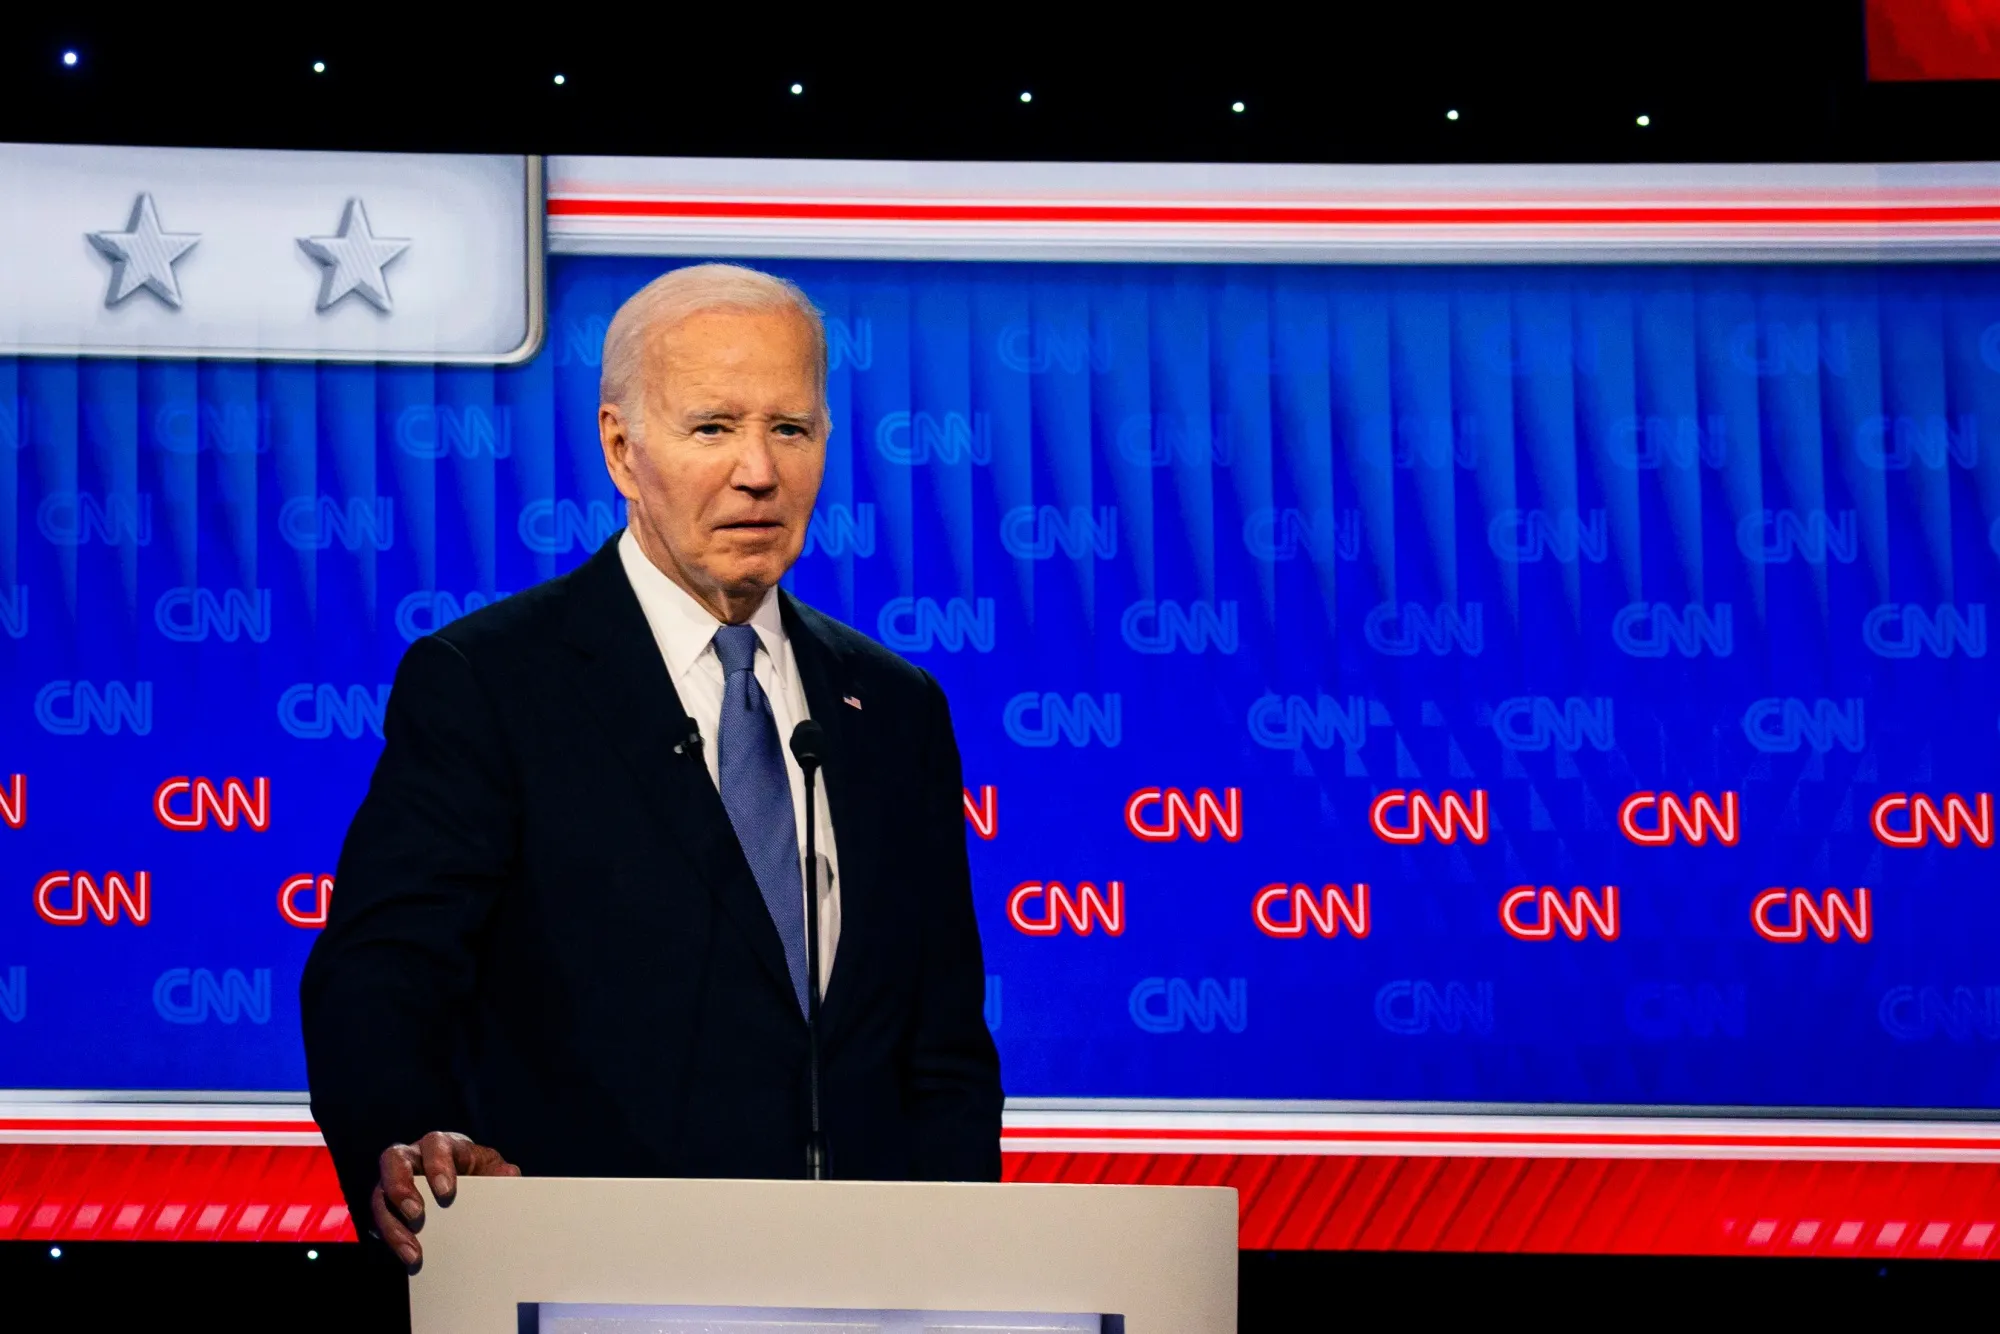 Democrats Consider Replacing Biden Following ‘Disastrous’ Debate